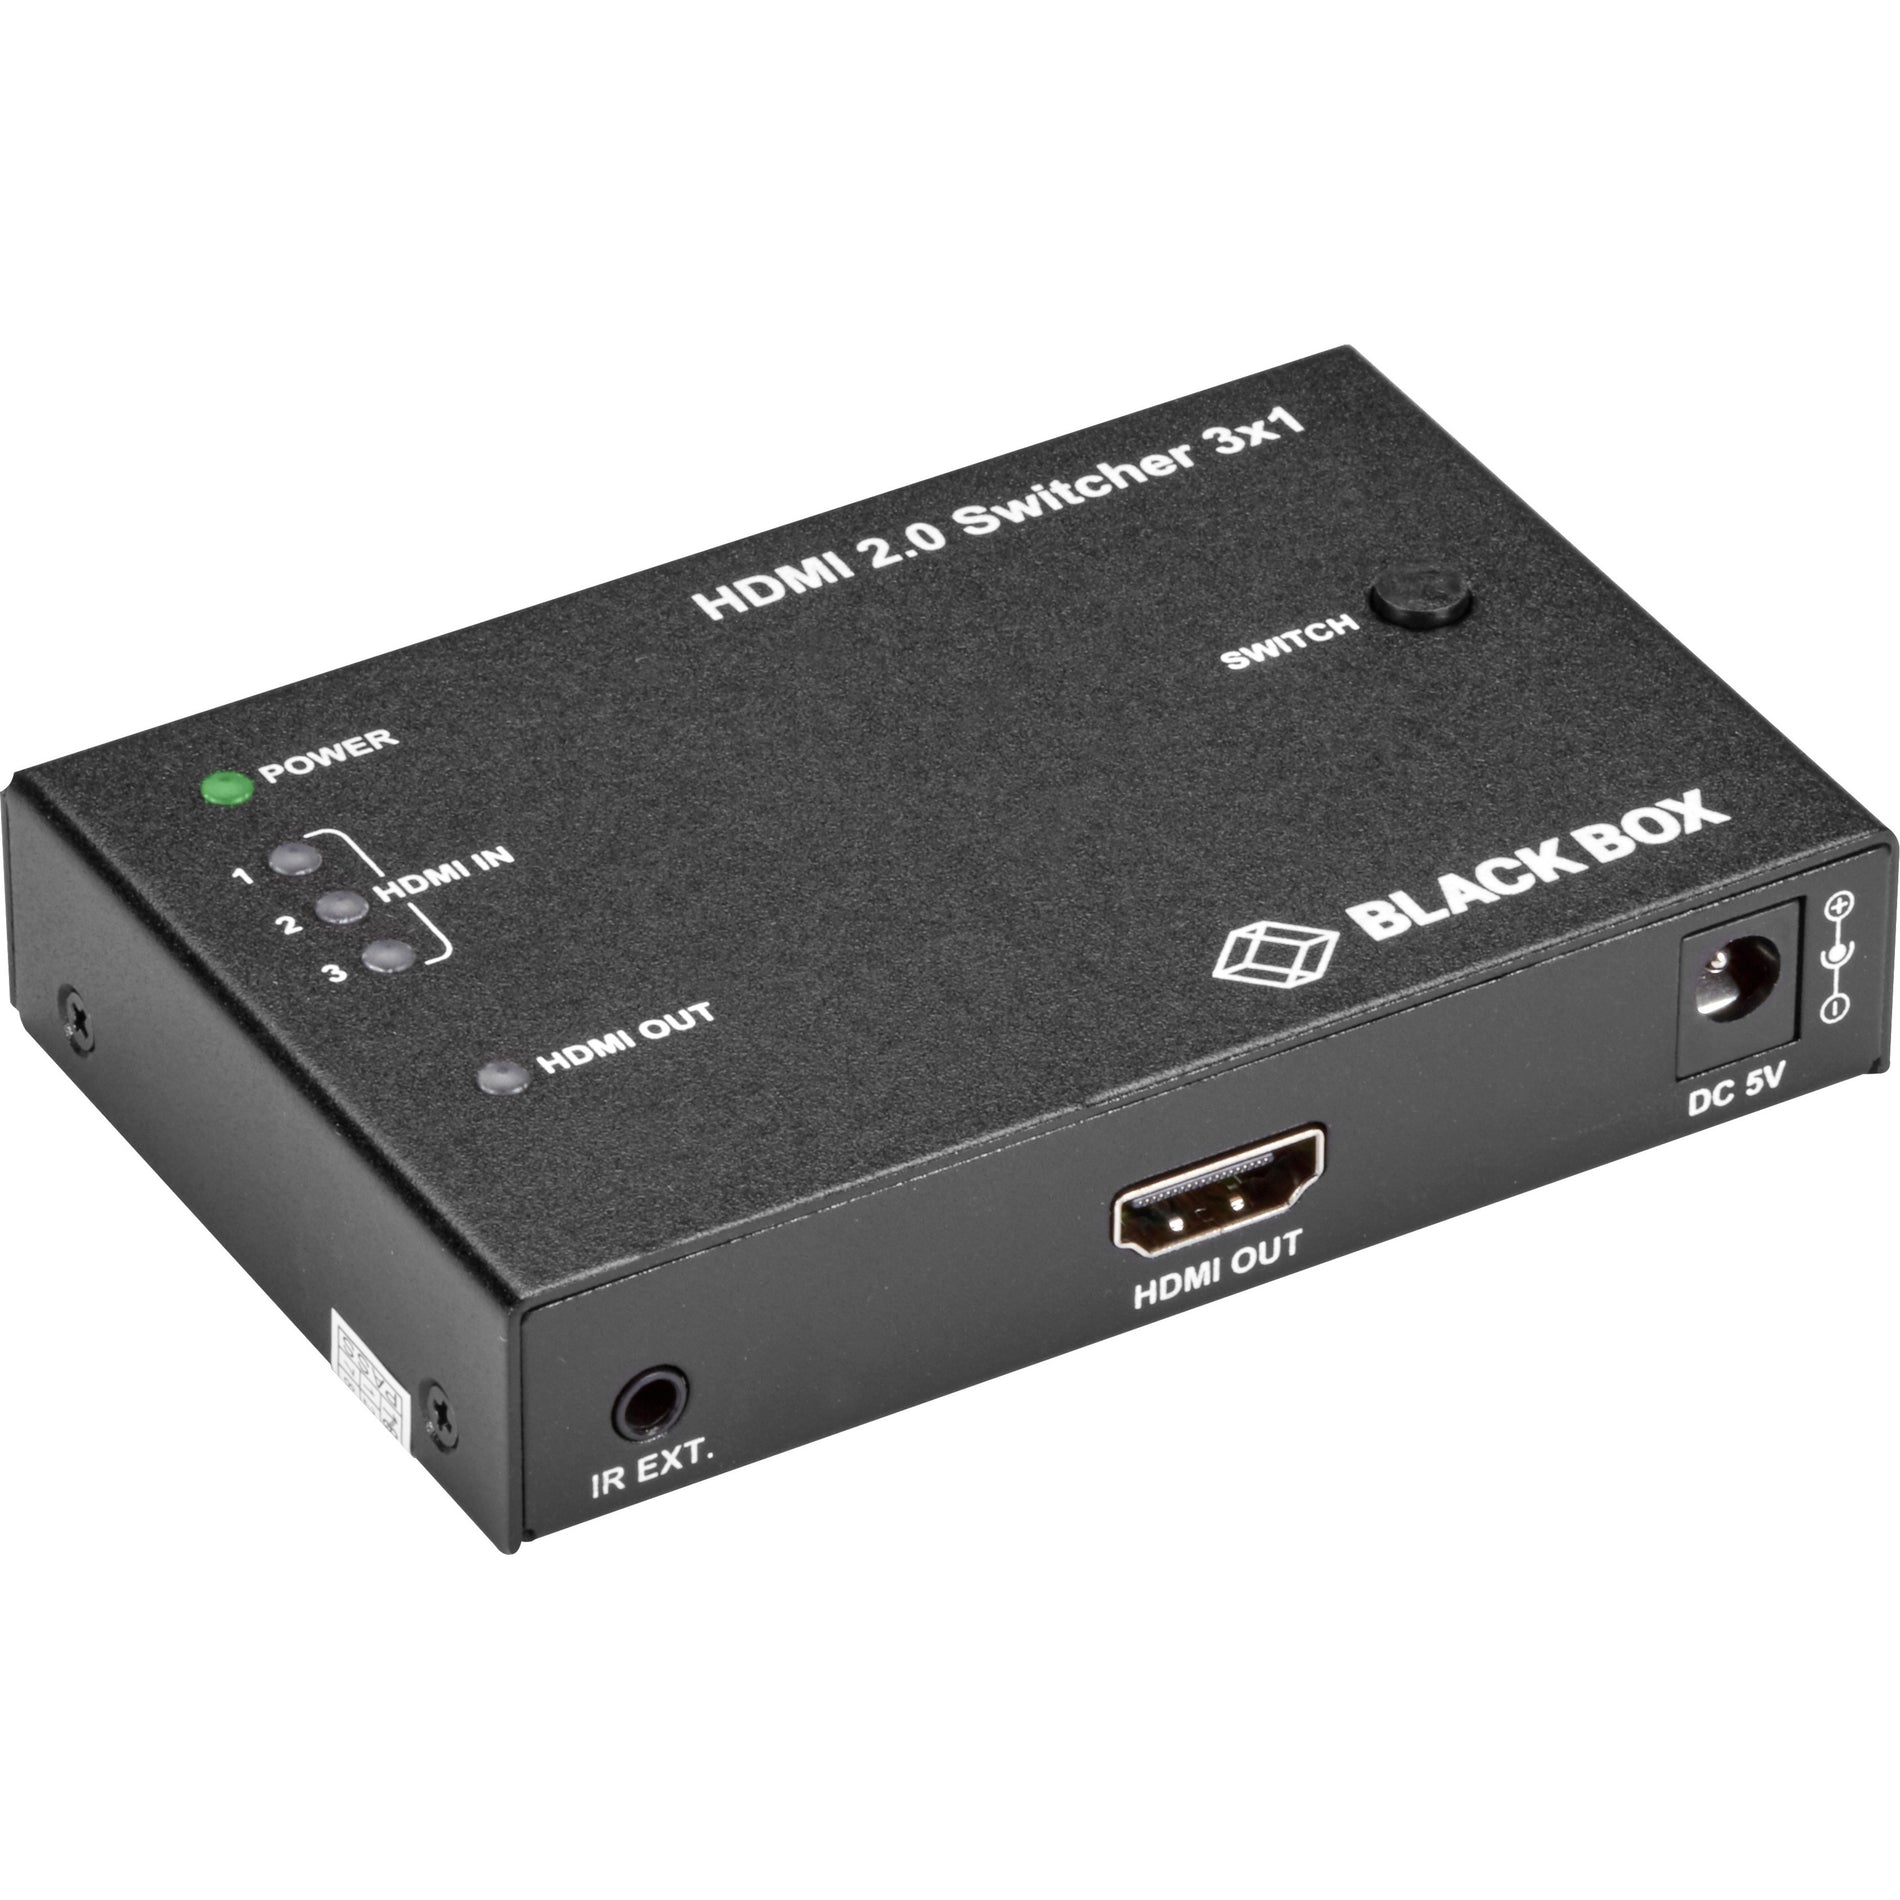 Black Box VSW-HDMI2-3X1 HDMI 2.0 4K Video Switch - 3x1, 3 Inputs, 1 Output